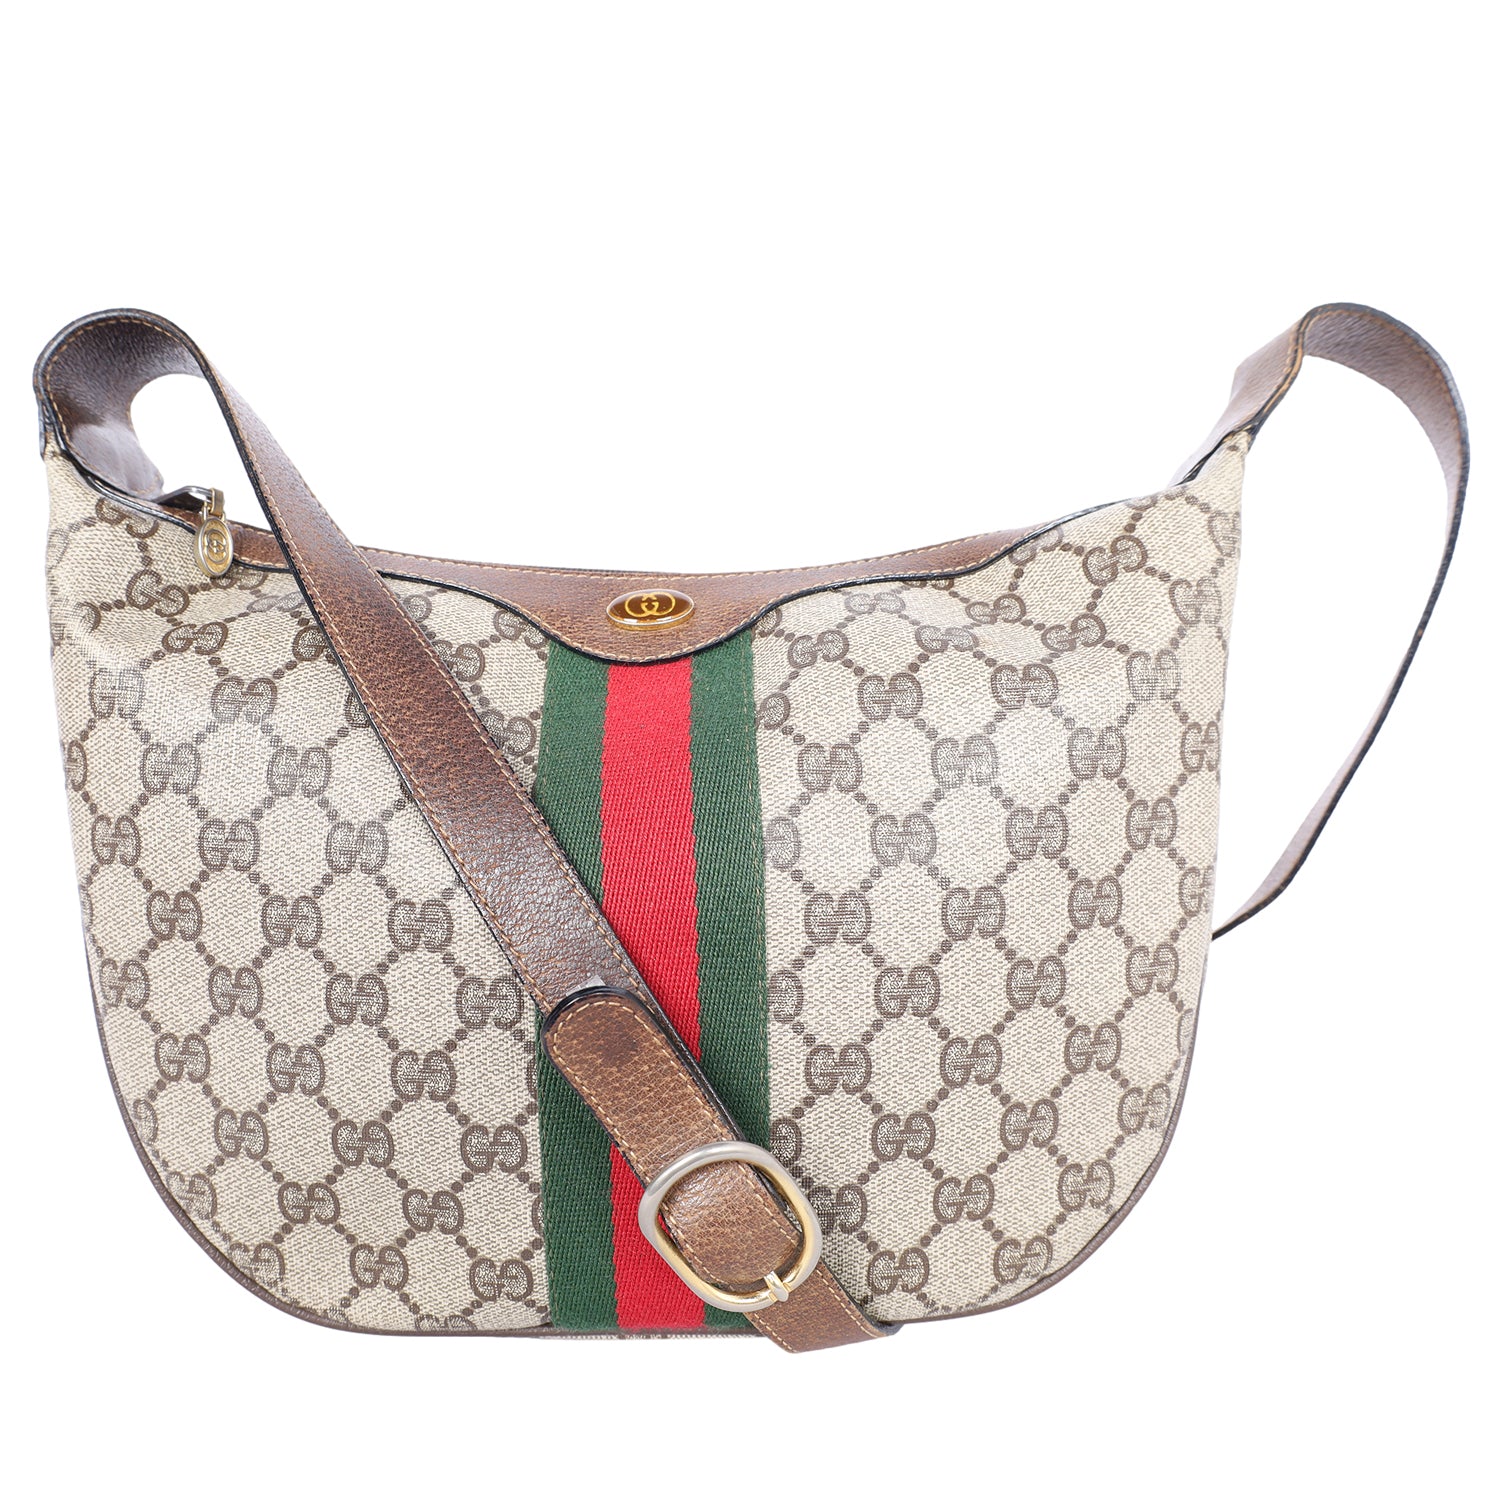 Gucci GG Supreme Monogram Web Small Ophidia Chain Shoulder Bag